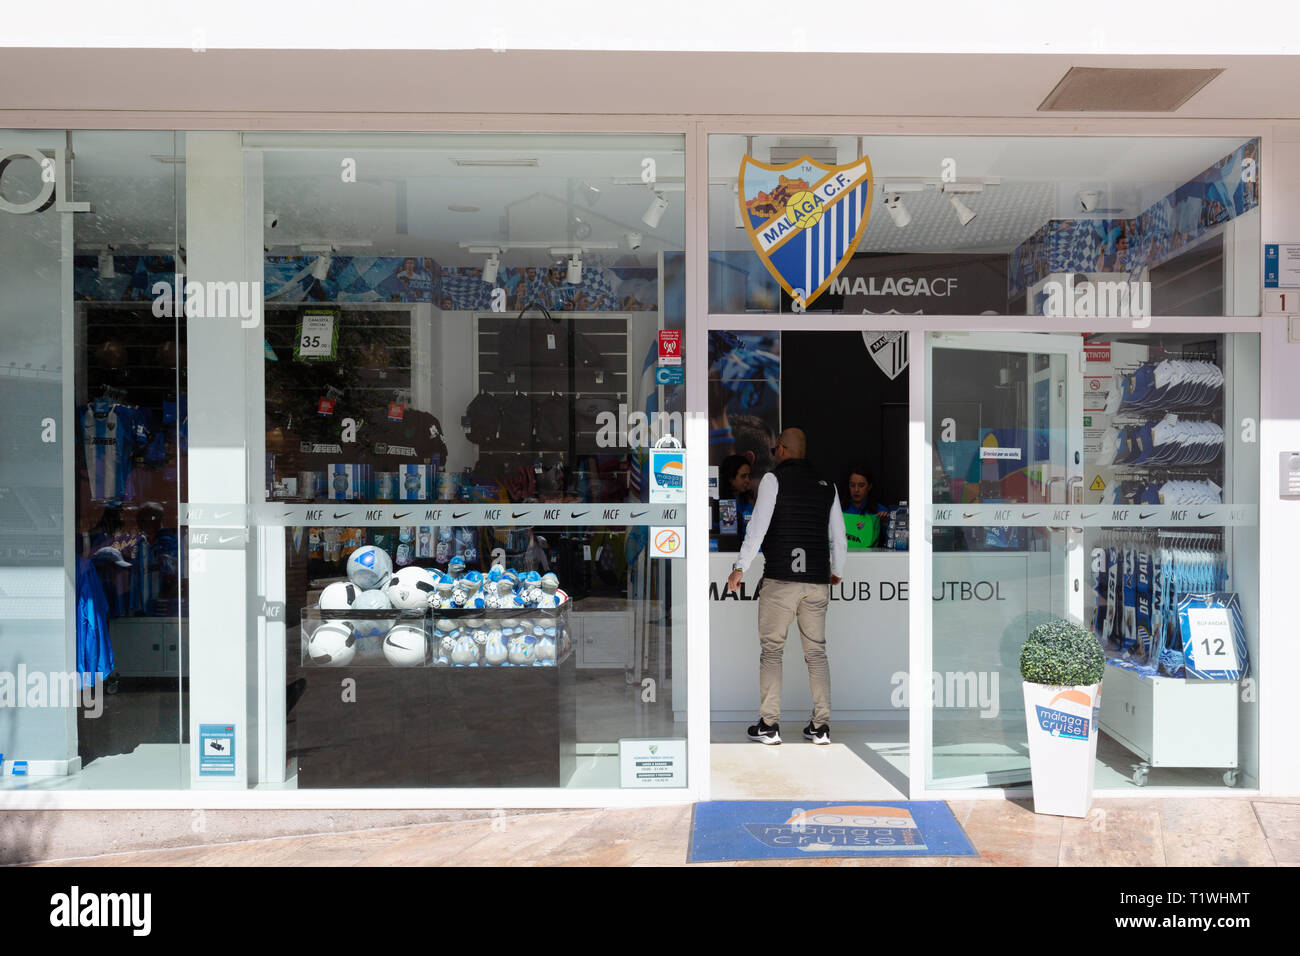 Malaga CF, or Malaga Club de futbol - the exterior of the Malaga Football Club shop in Malaga Andalusia Spain Stock Photo